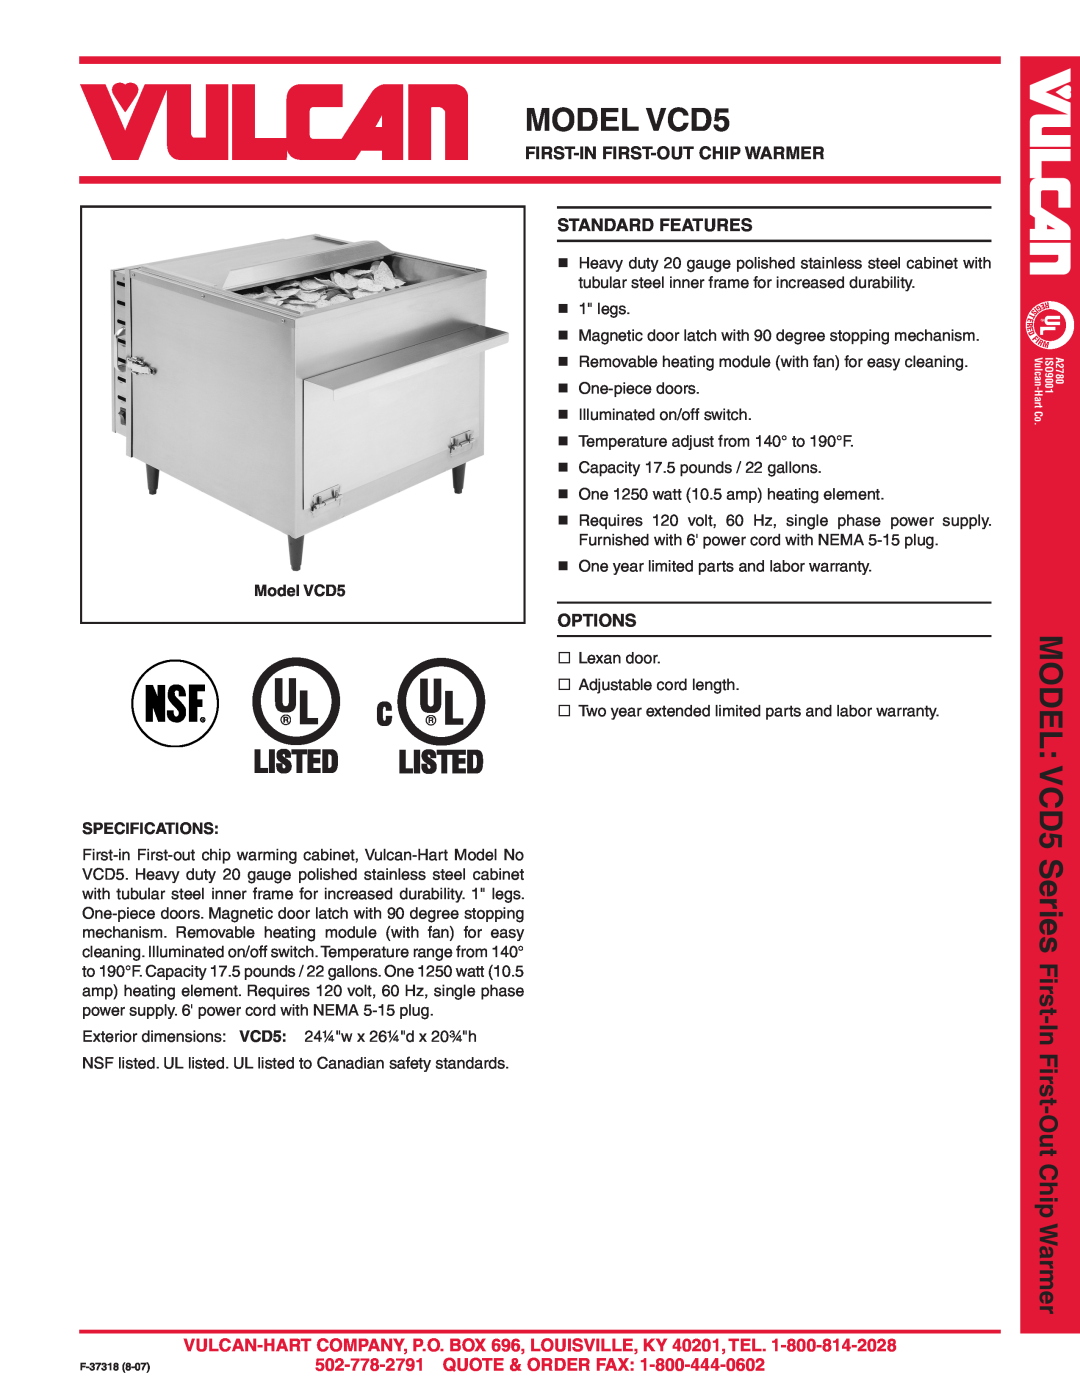 Vulcan-Hart warranty MODEL VCD5 Series First, First-In First-Outchip Warmer, Standard Features, Options 